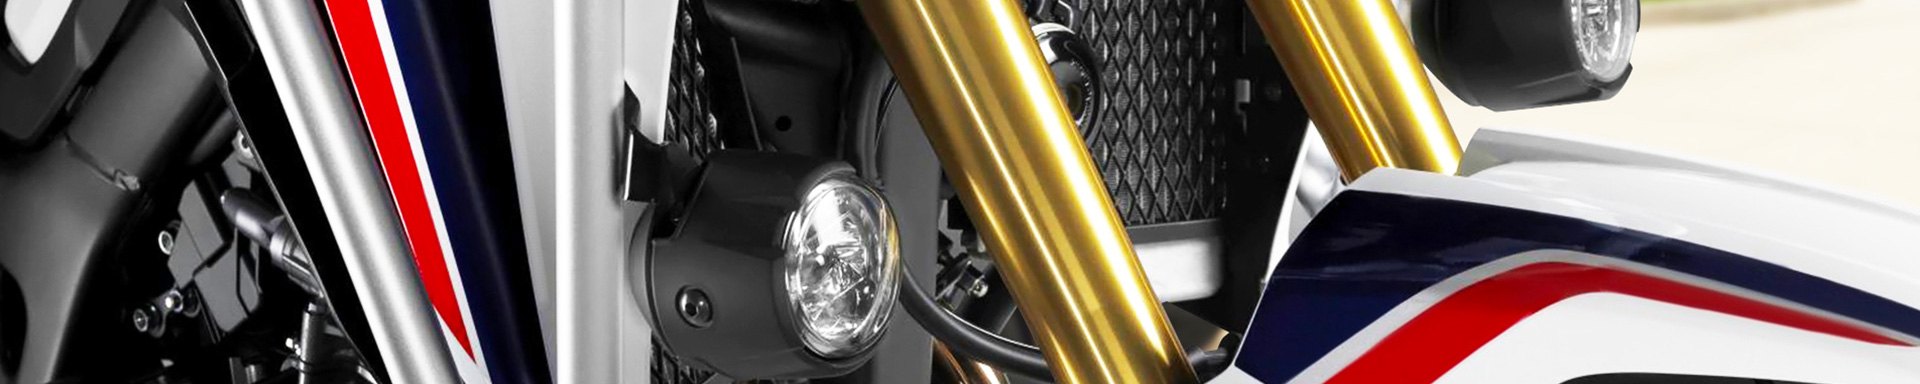 Universal Motorcycle Light Mounts & Brackets